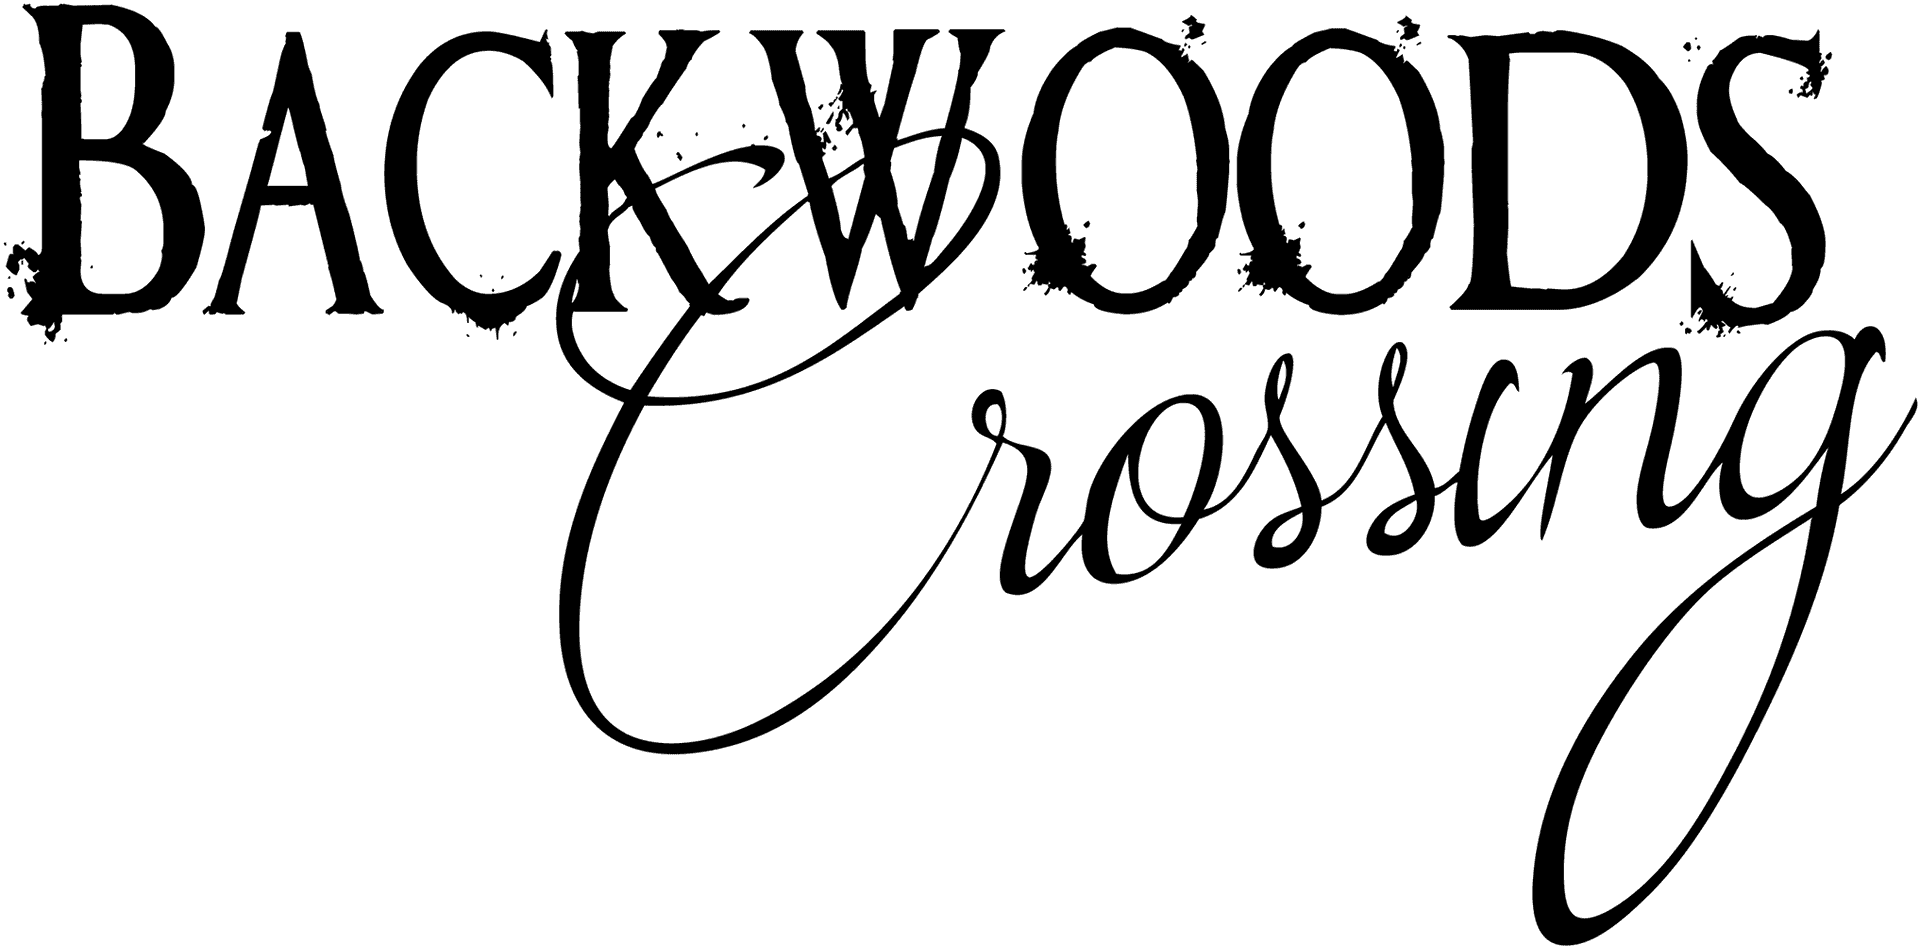 Backwoods Crossing Logo PNG image